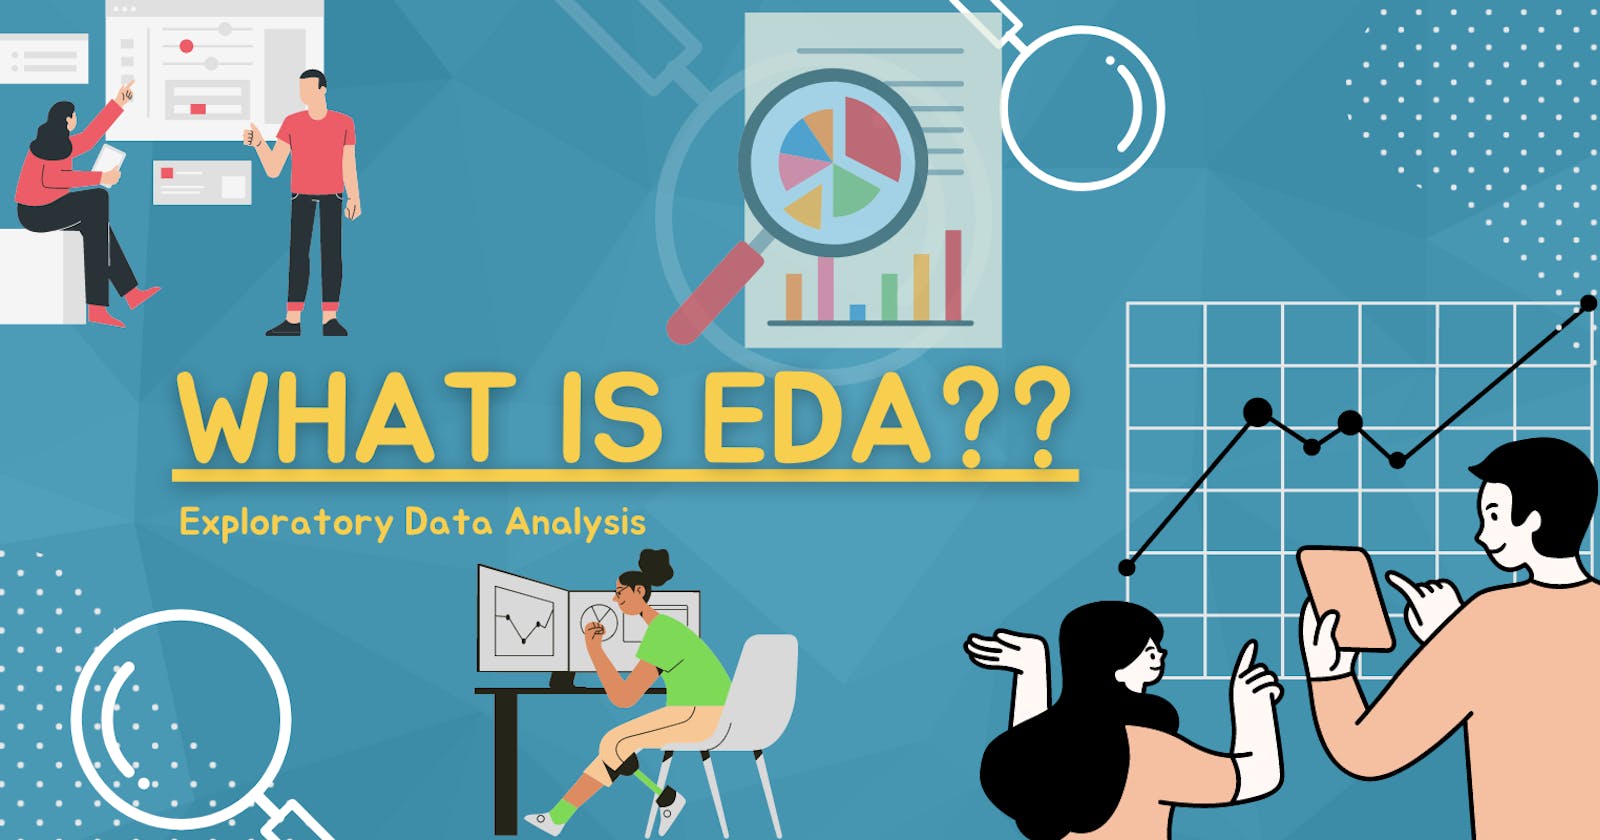 Data Discovery through Exploratory Data Analysis